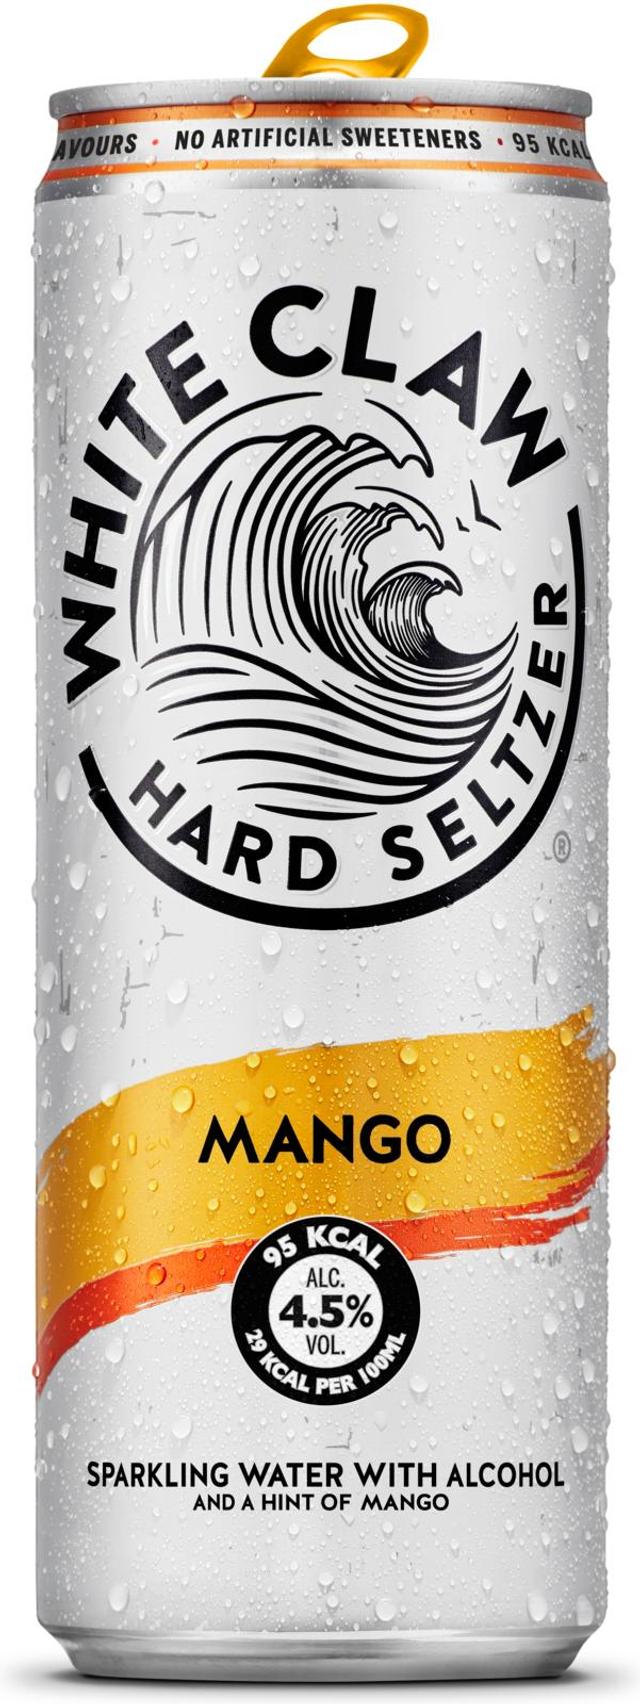 White Claw Hard Seltzer Mango 4,5% 0,33l